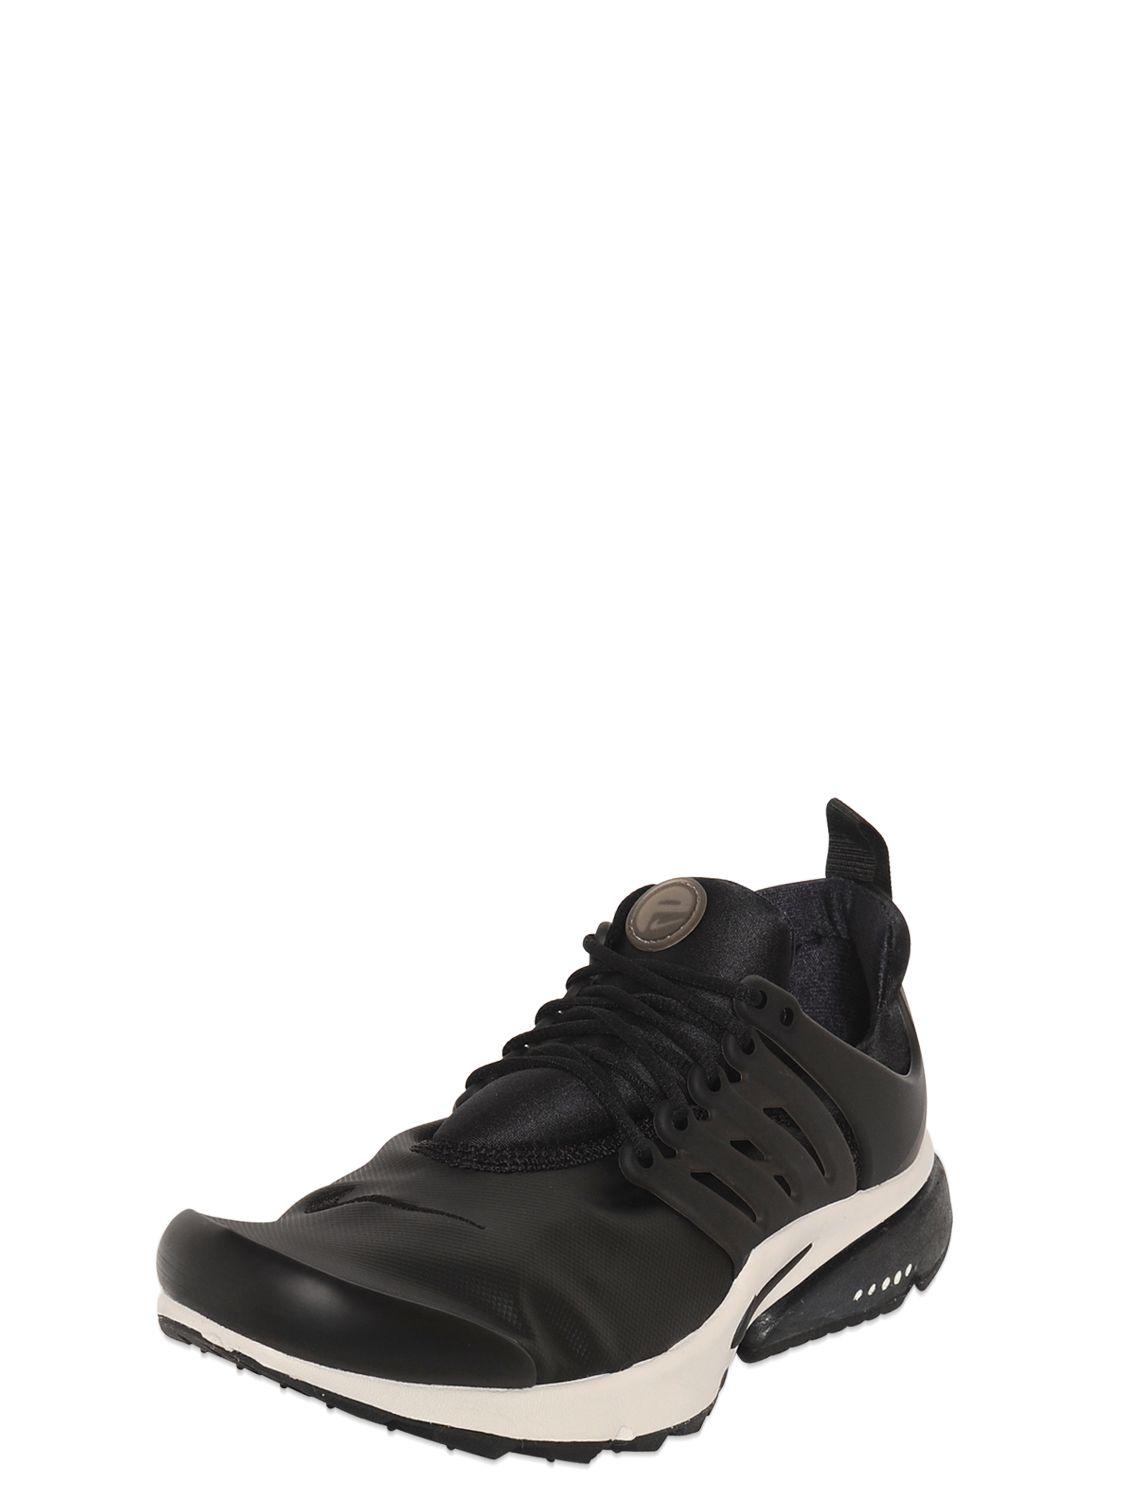 Nike Rubber Air Presto Utility Waterproof Sneakers in Black for Men - Lyst